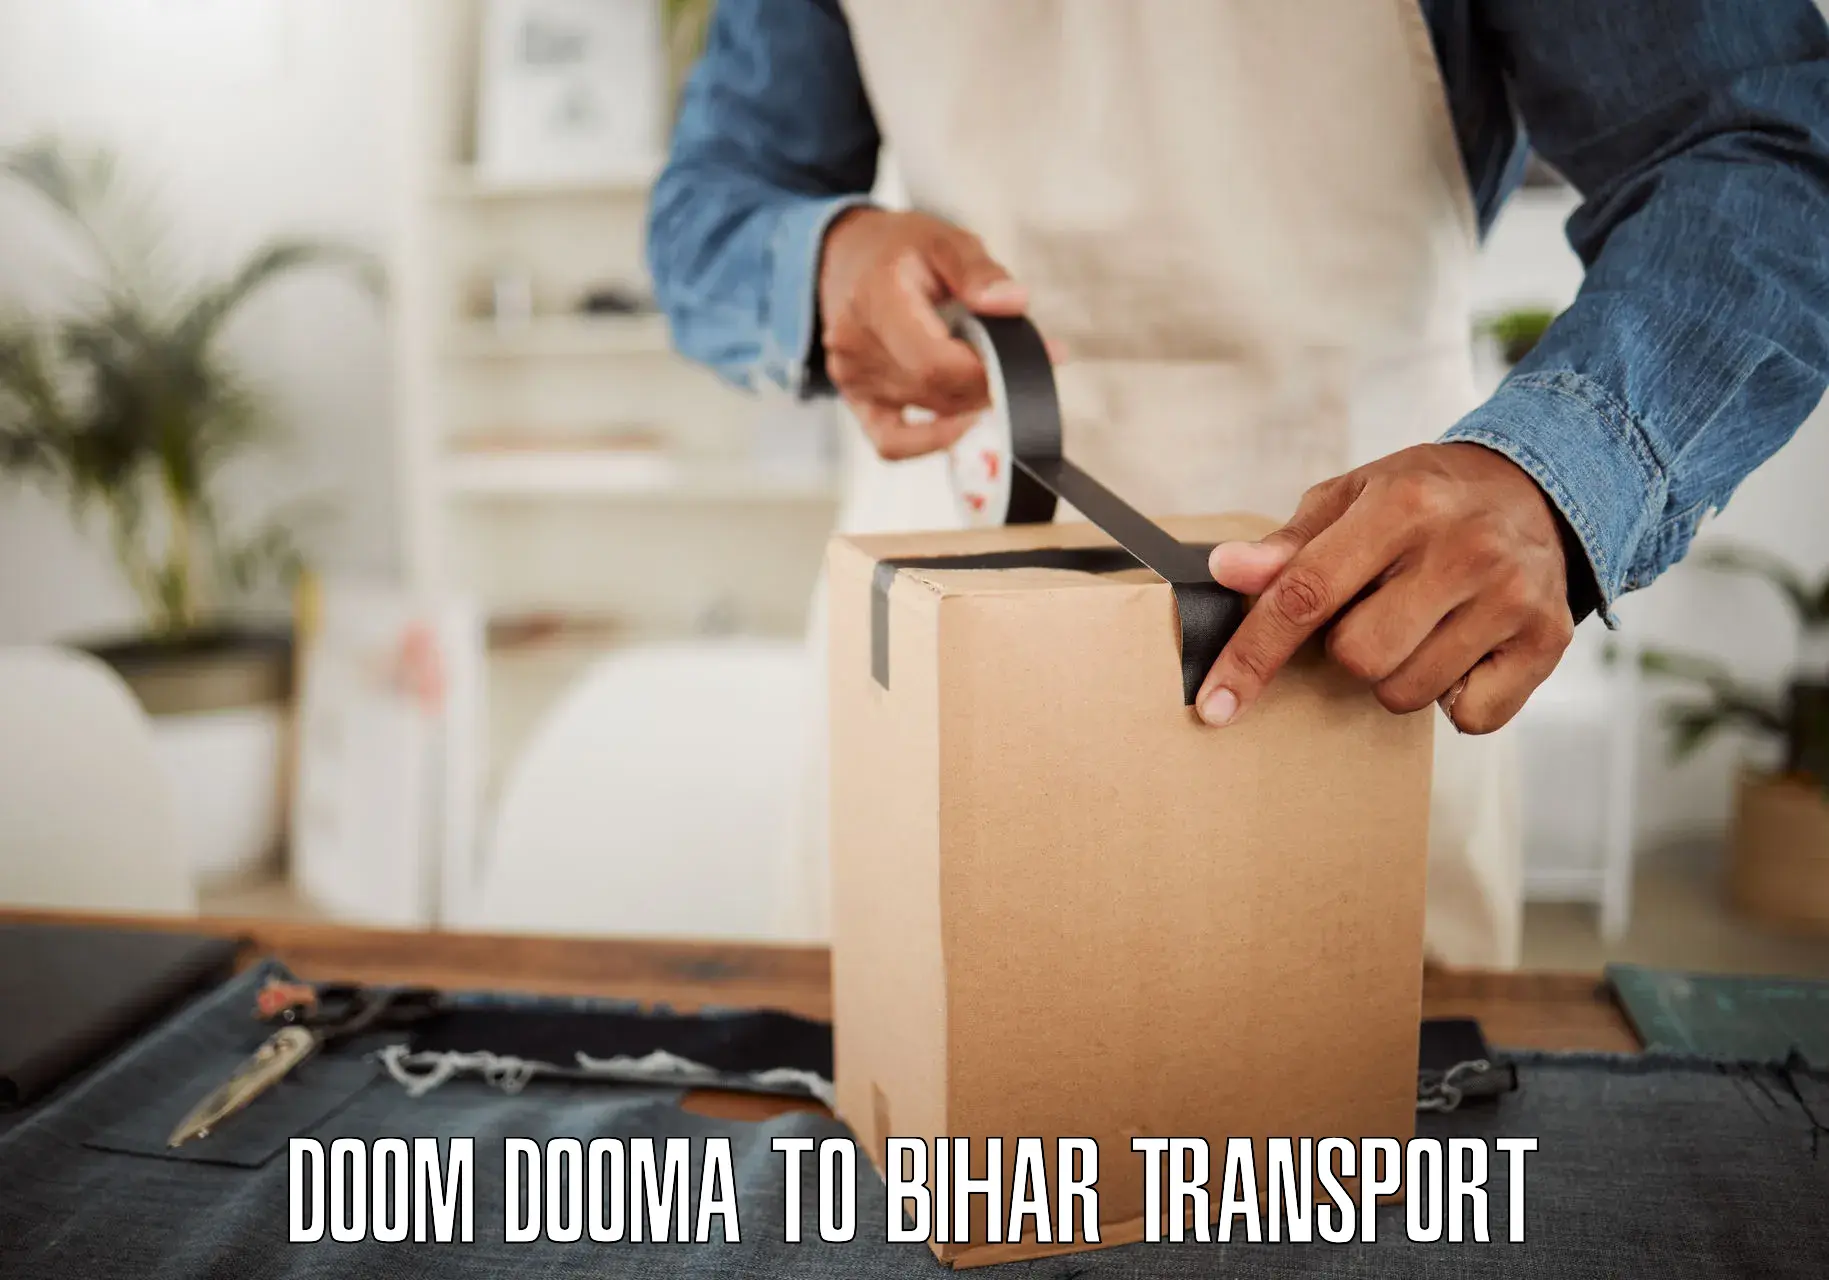 Nationwide transport services Doom Dooma to Patna